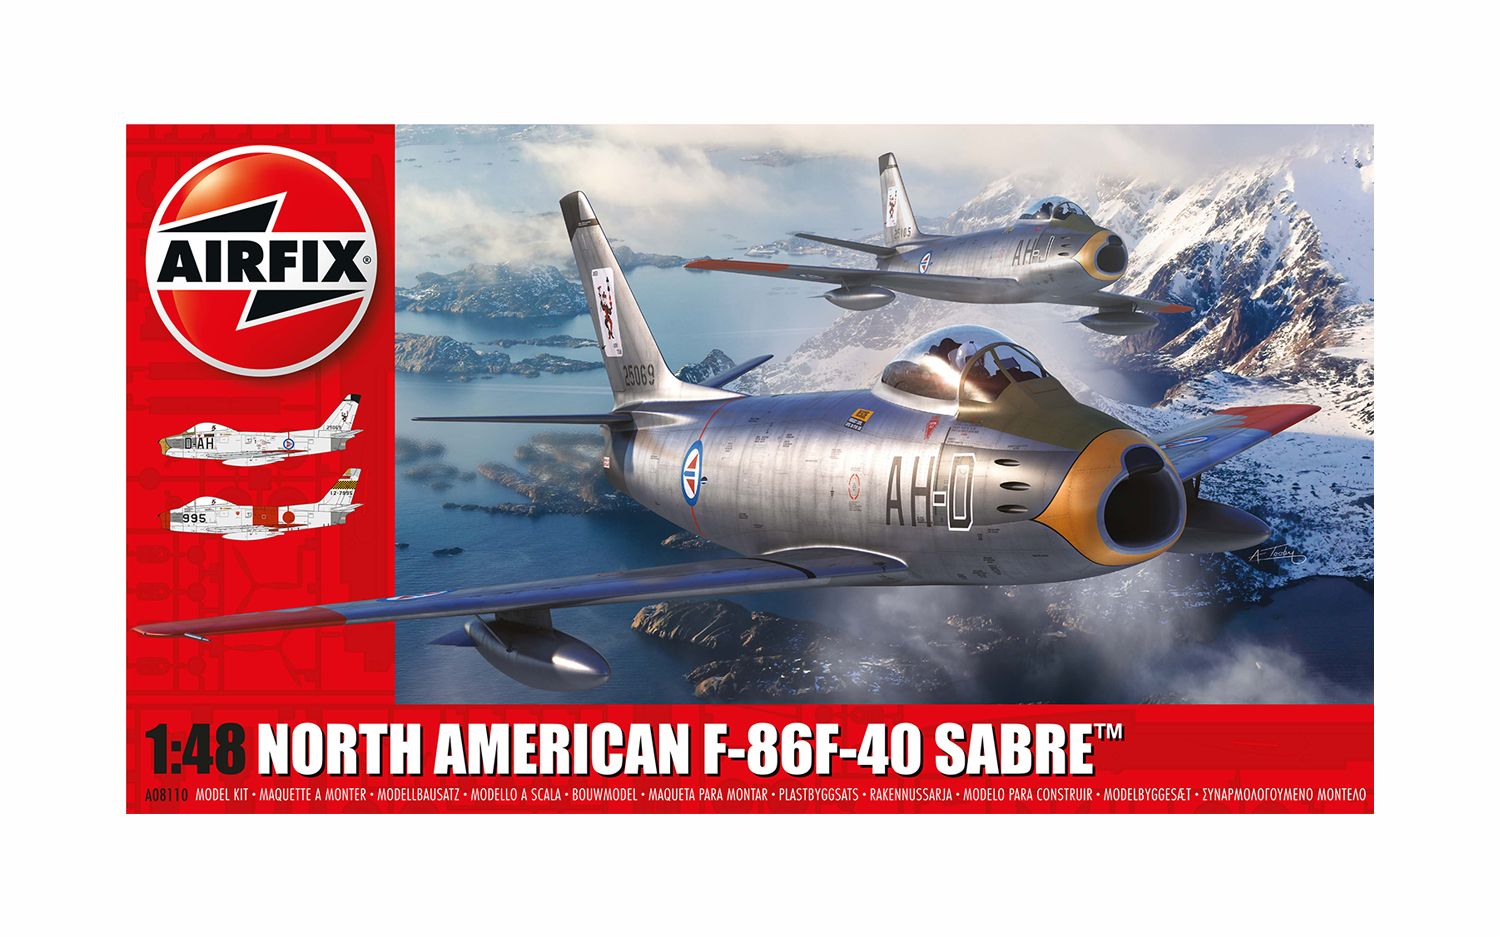 A08110 North American F-86F-40 Sabre